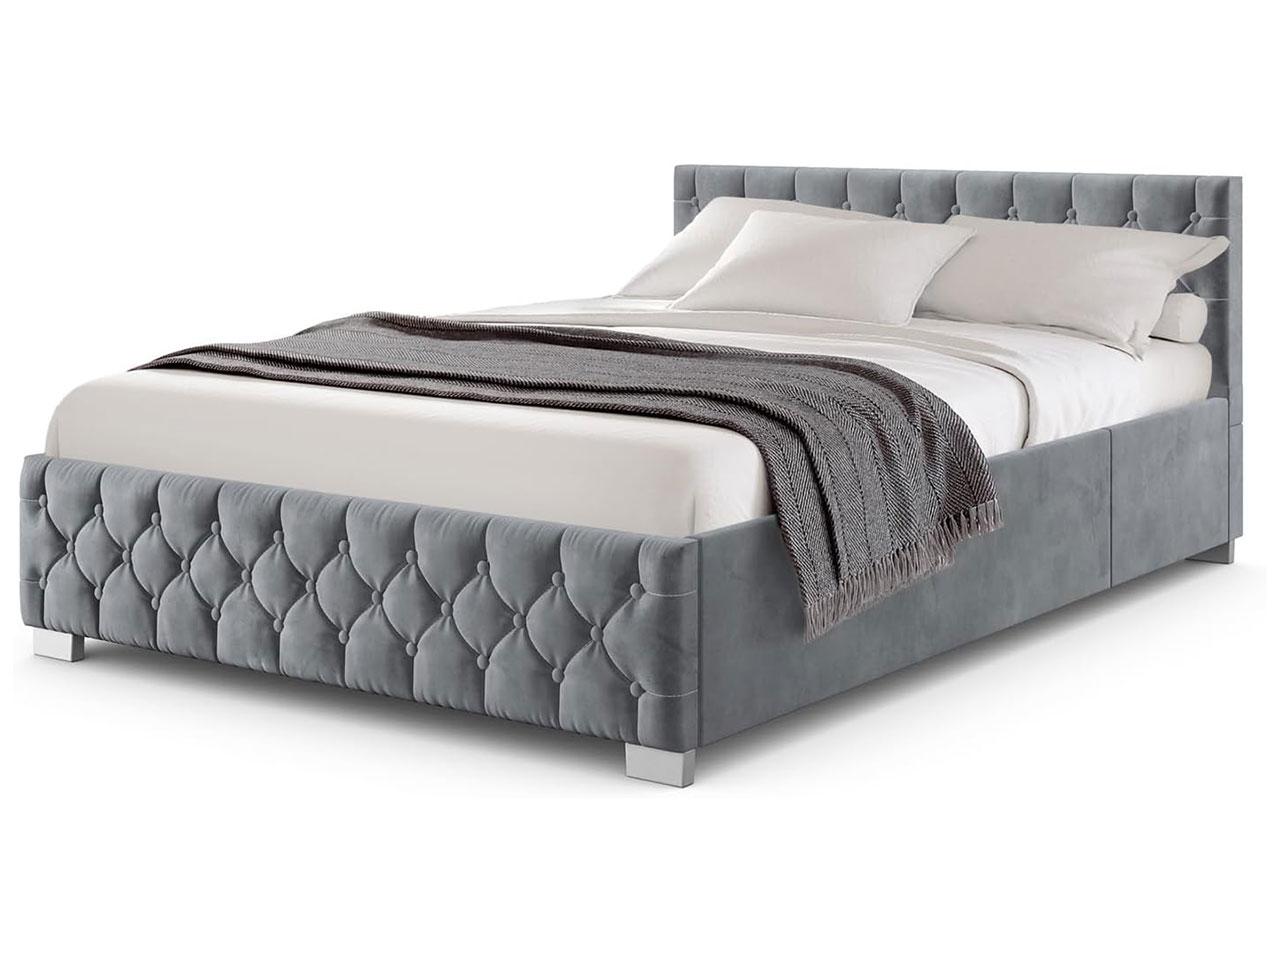 Čalúnená posteľ 300256, s latkovým roštom, sivá, 180 x 200 cm - C - Spálňa